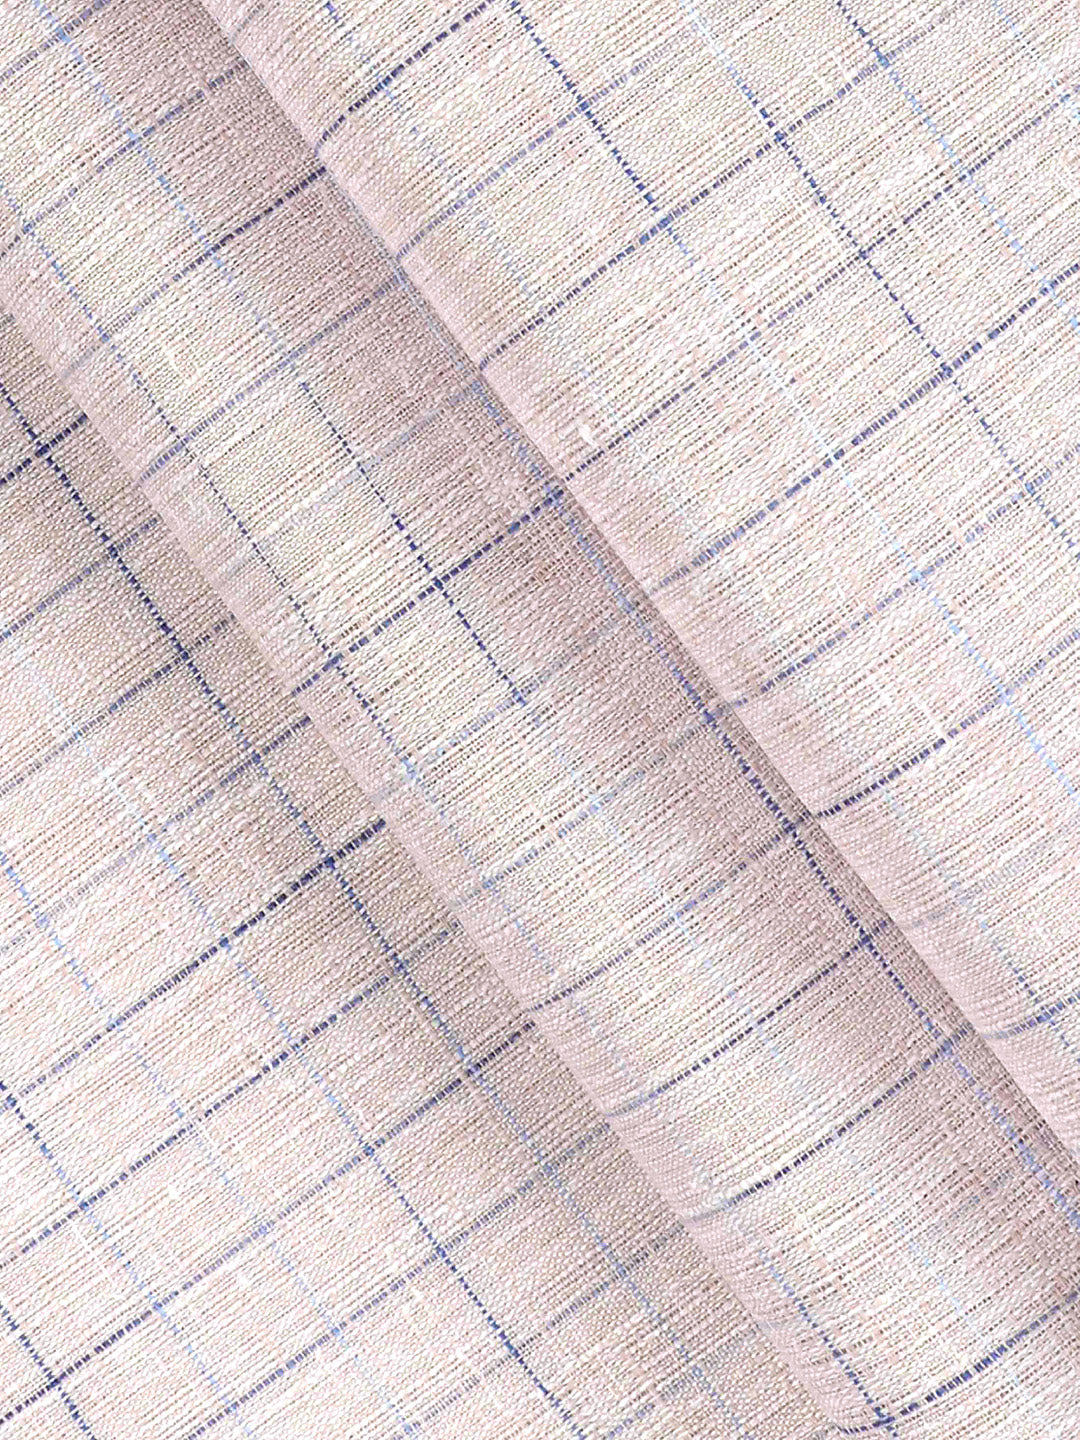 Cotton Colour Checked Shirt Fabric Light Pink Galaxy Art-Pattern view